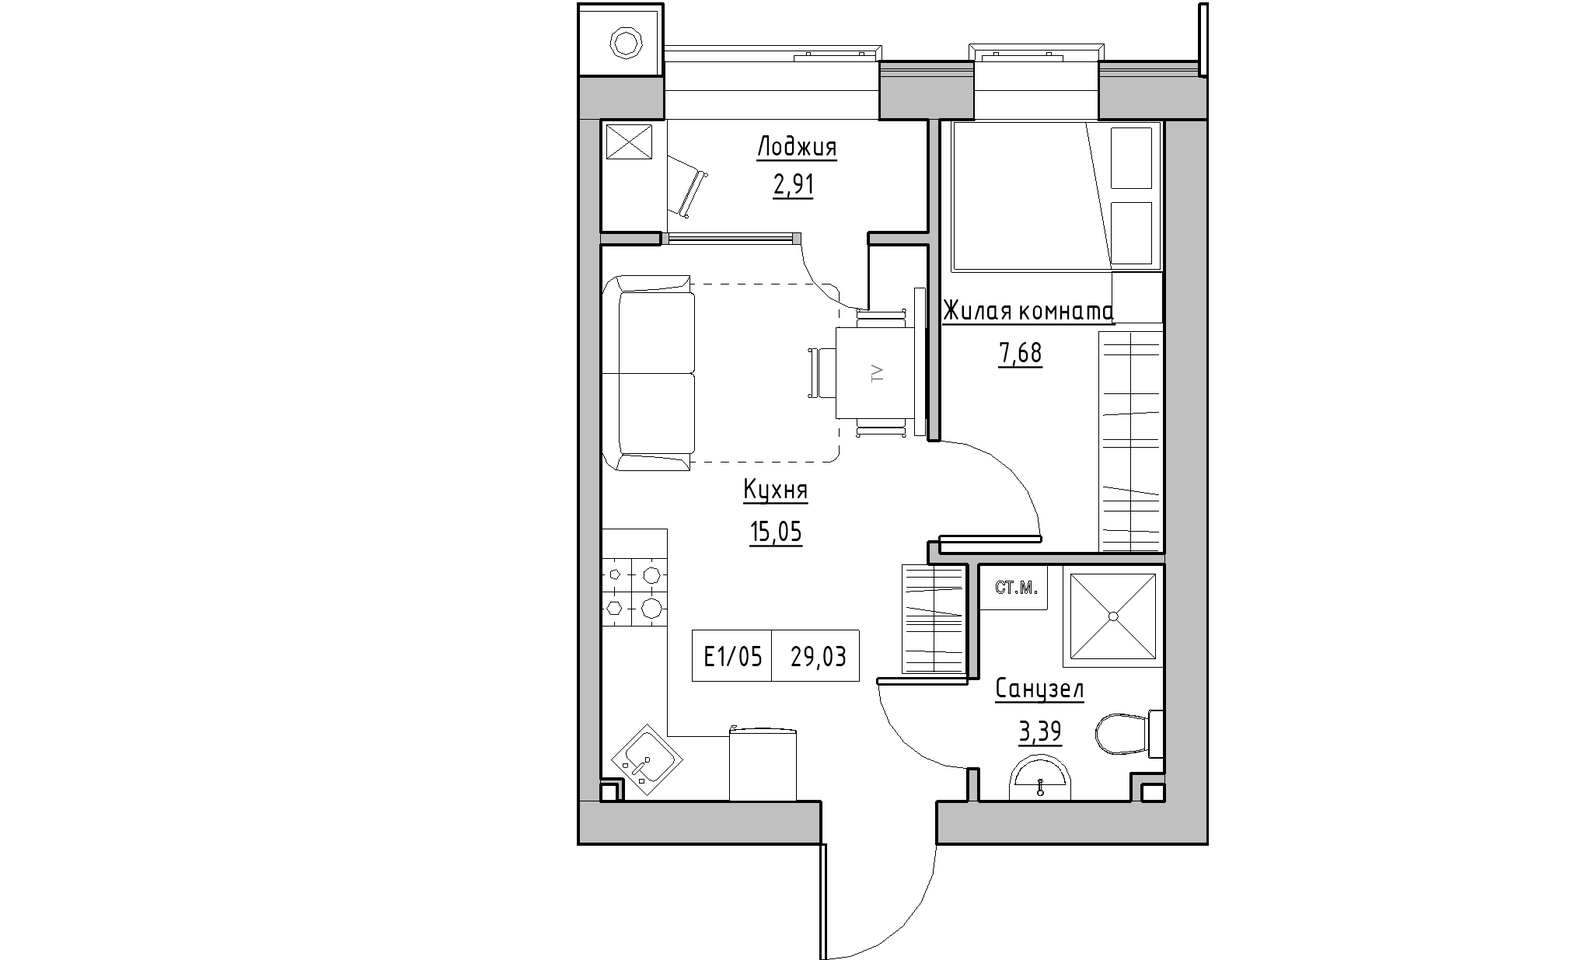 Planning 1-rm flats area 29.03m2, KS-014-01/0007.